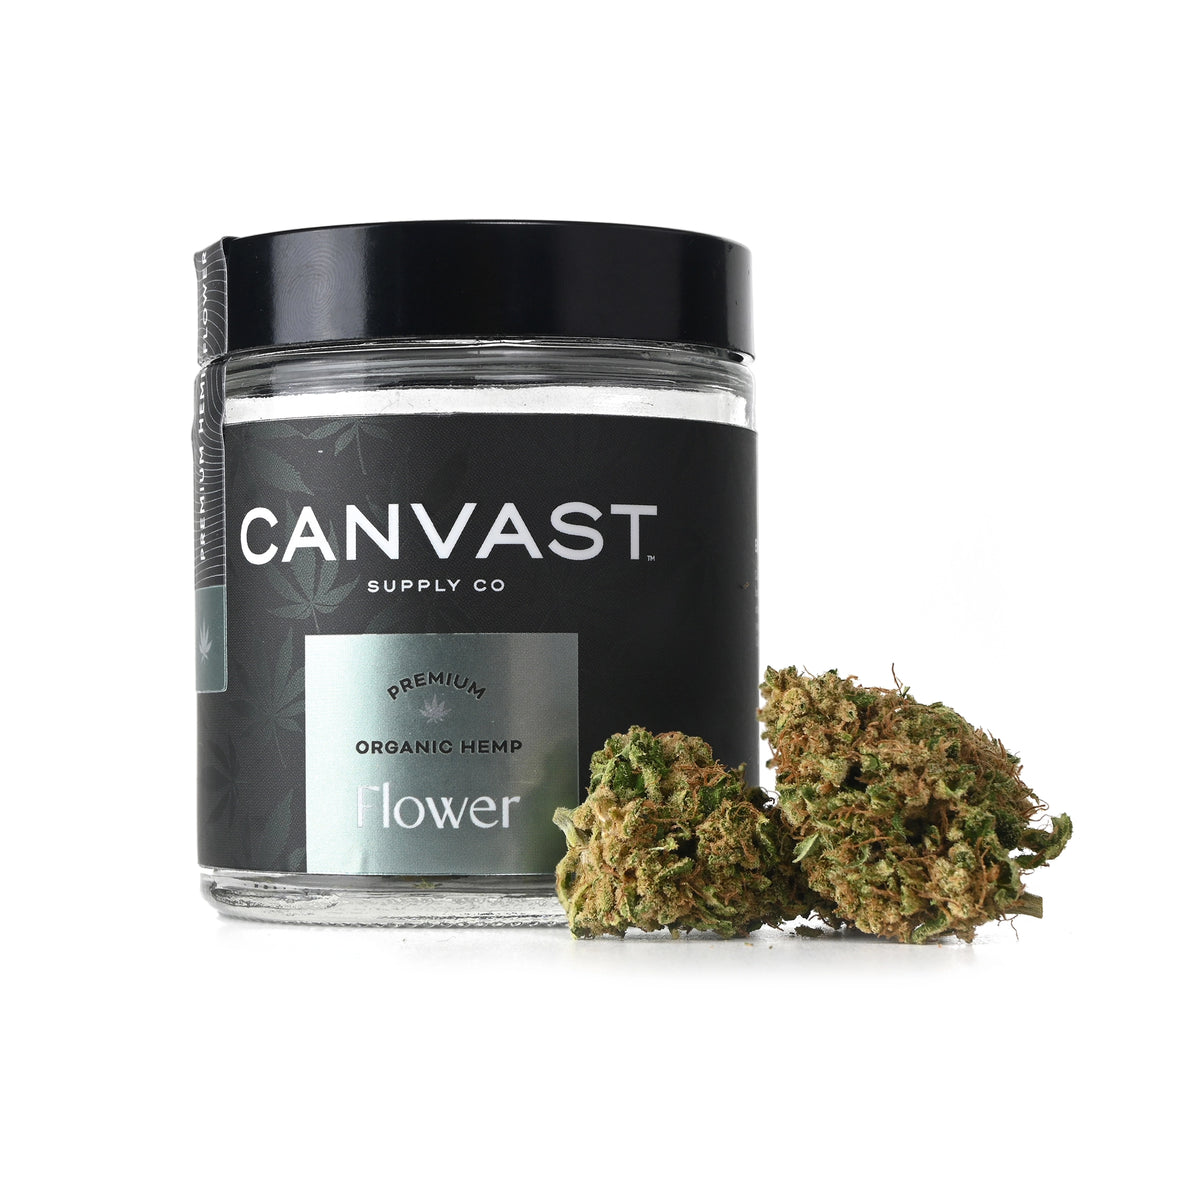 Canvast Premium Organic Hemp Flower 3.5 grams